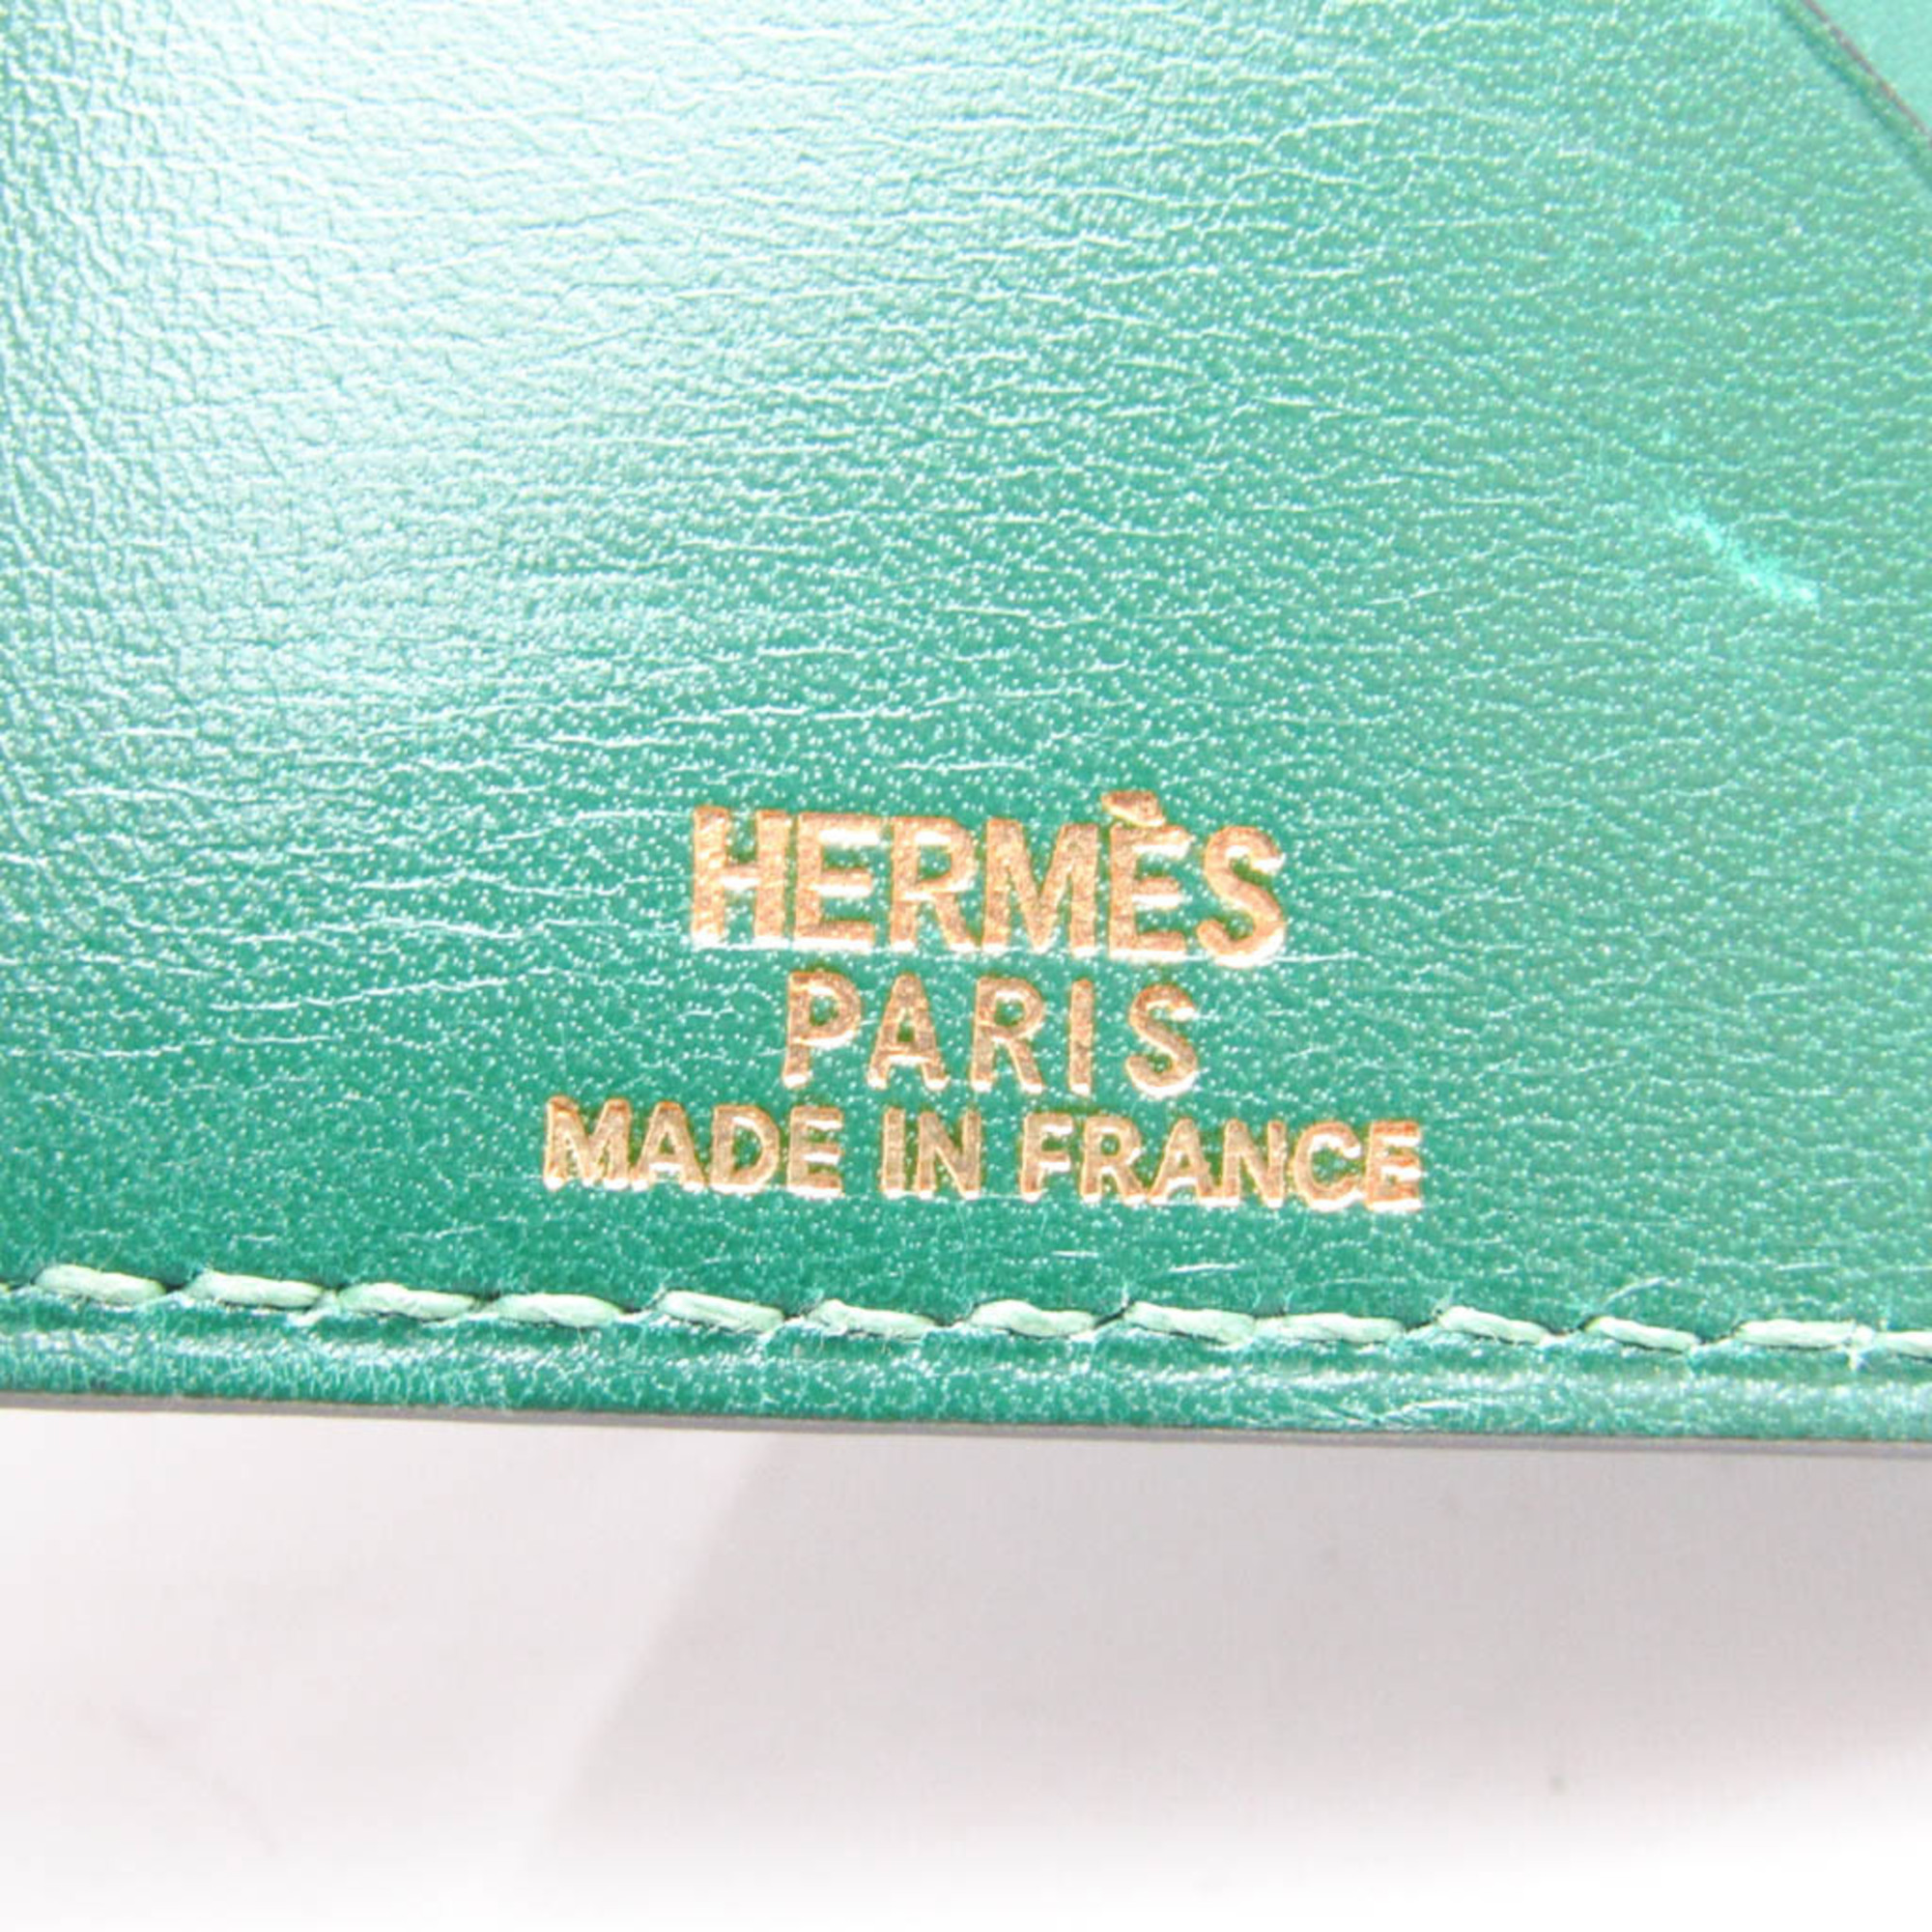 Hermes Agenda Personal Size Planner Cover Black,Green Vision